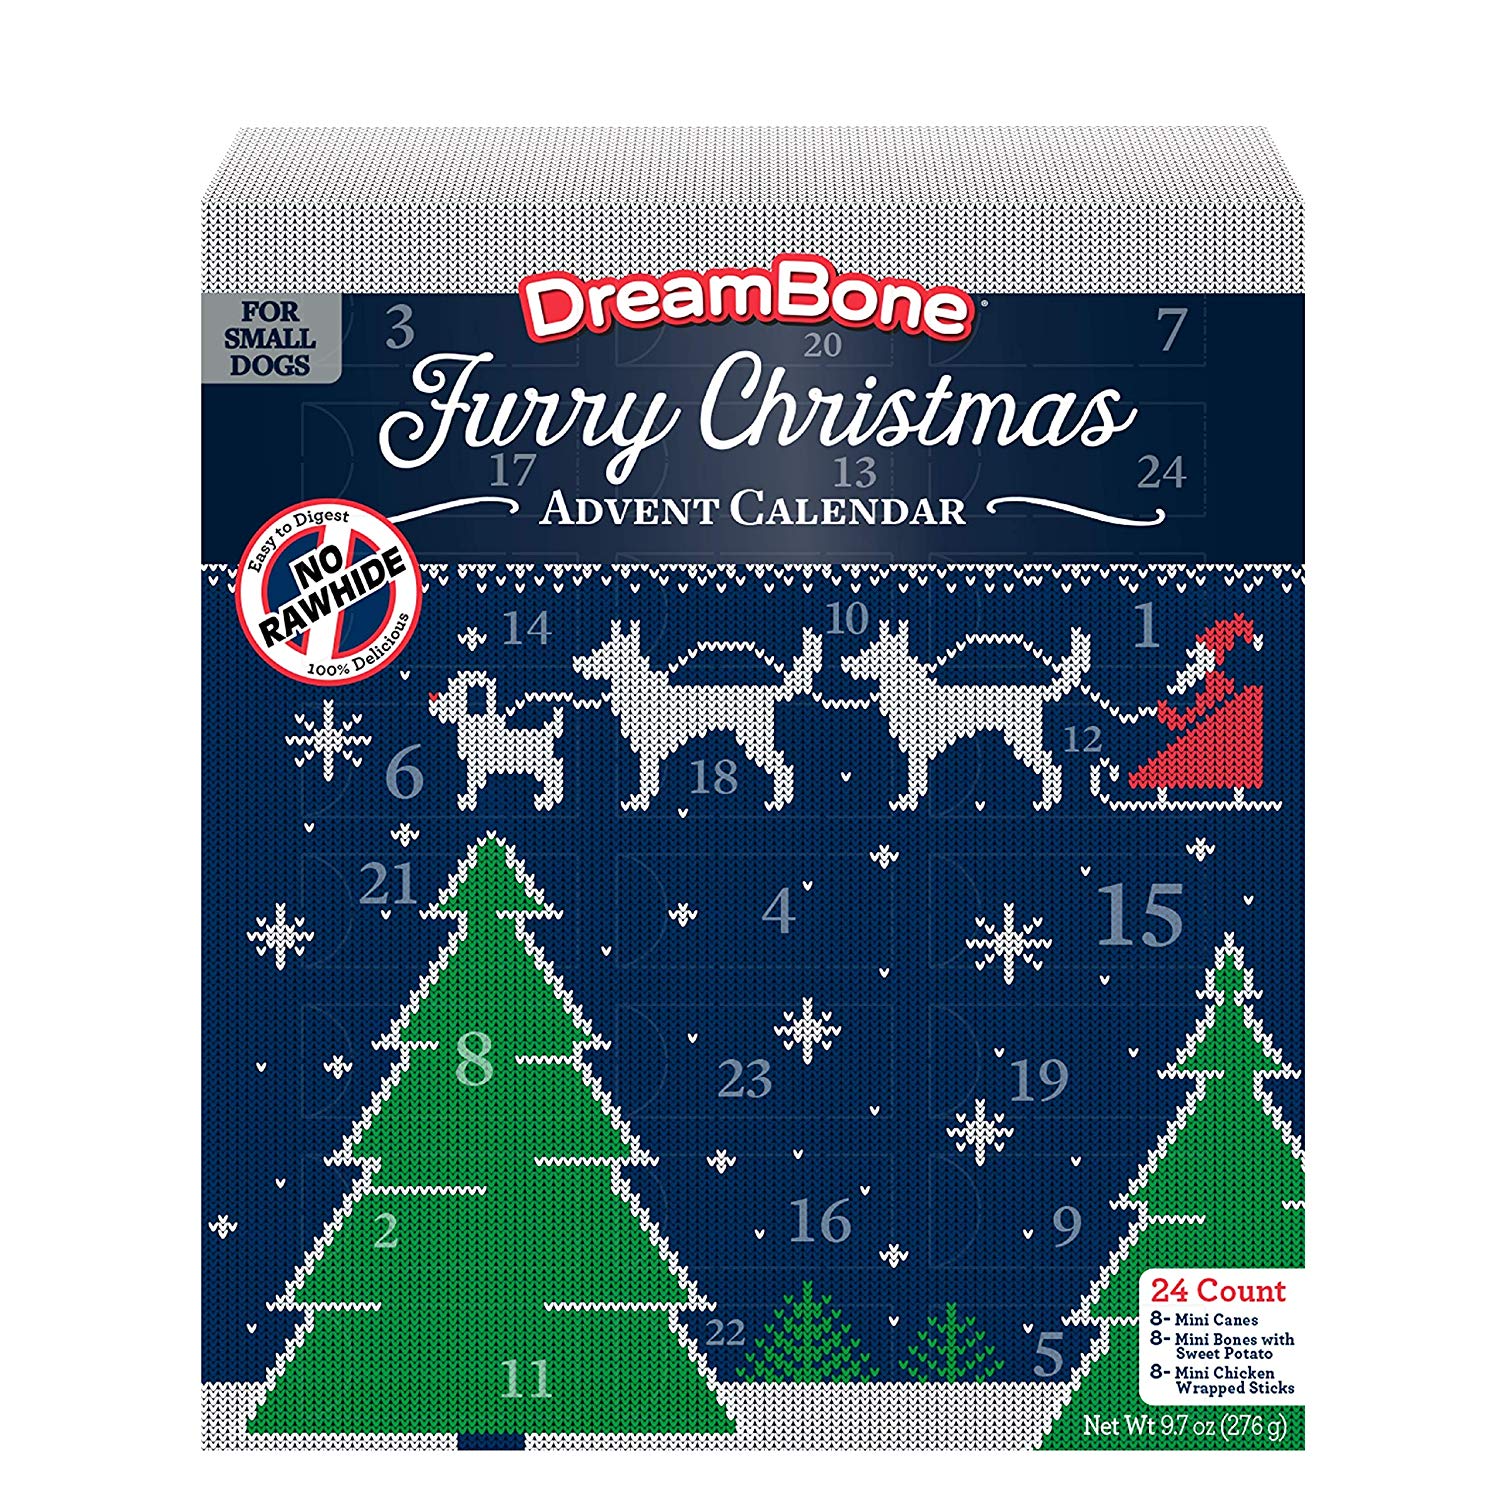 Treat your Dog this Holiday Season Advent Calendar Dreambone